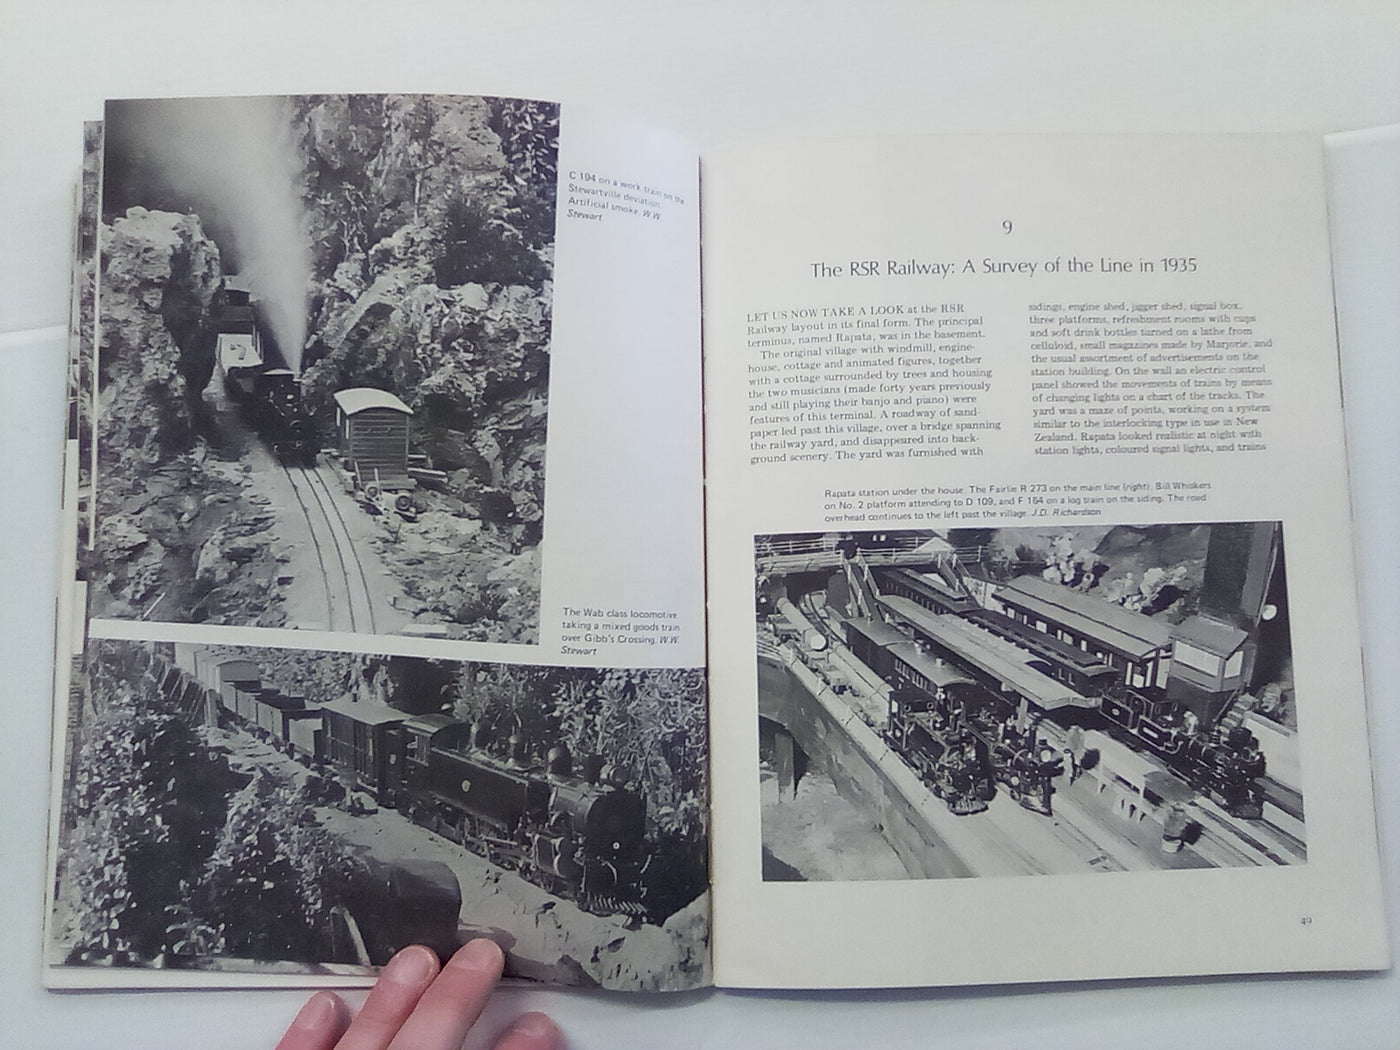 Steam in Miniature - Frank Roberts & his Garden Railway